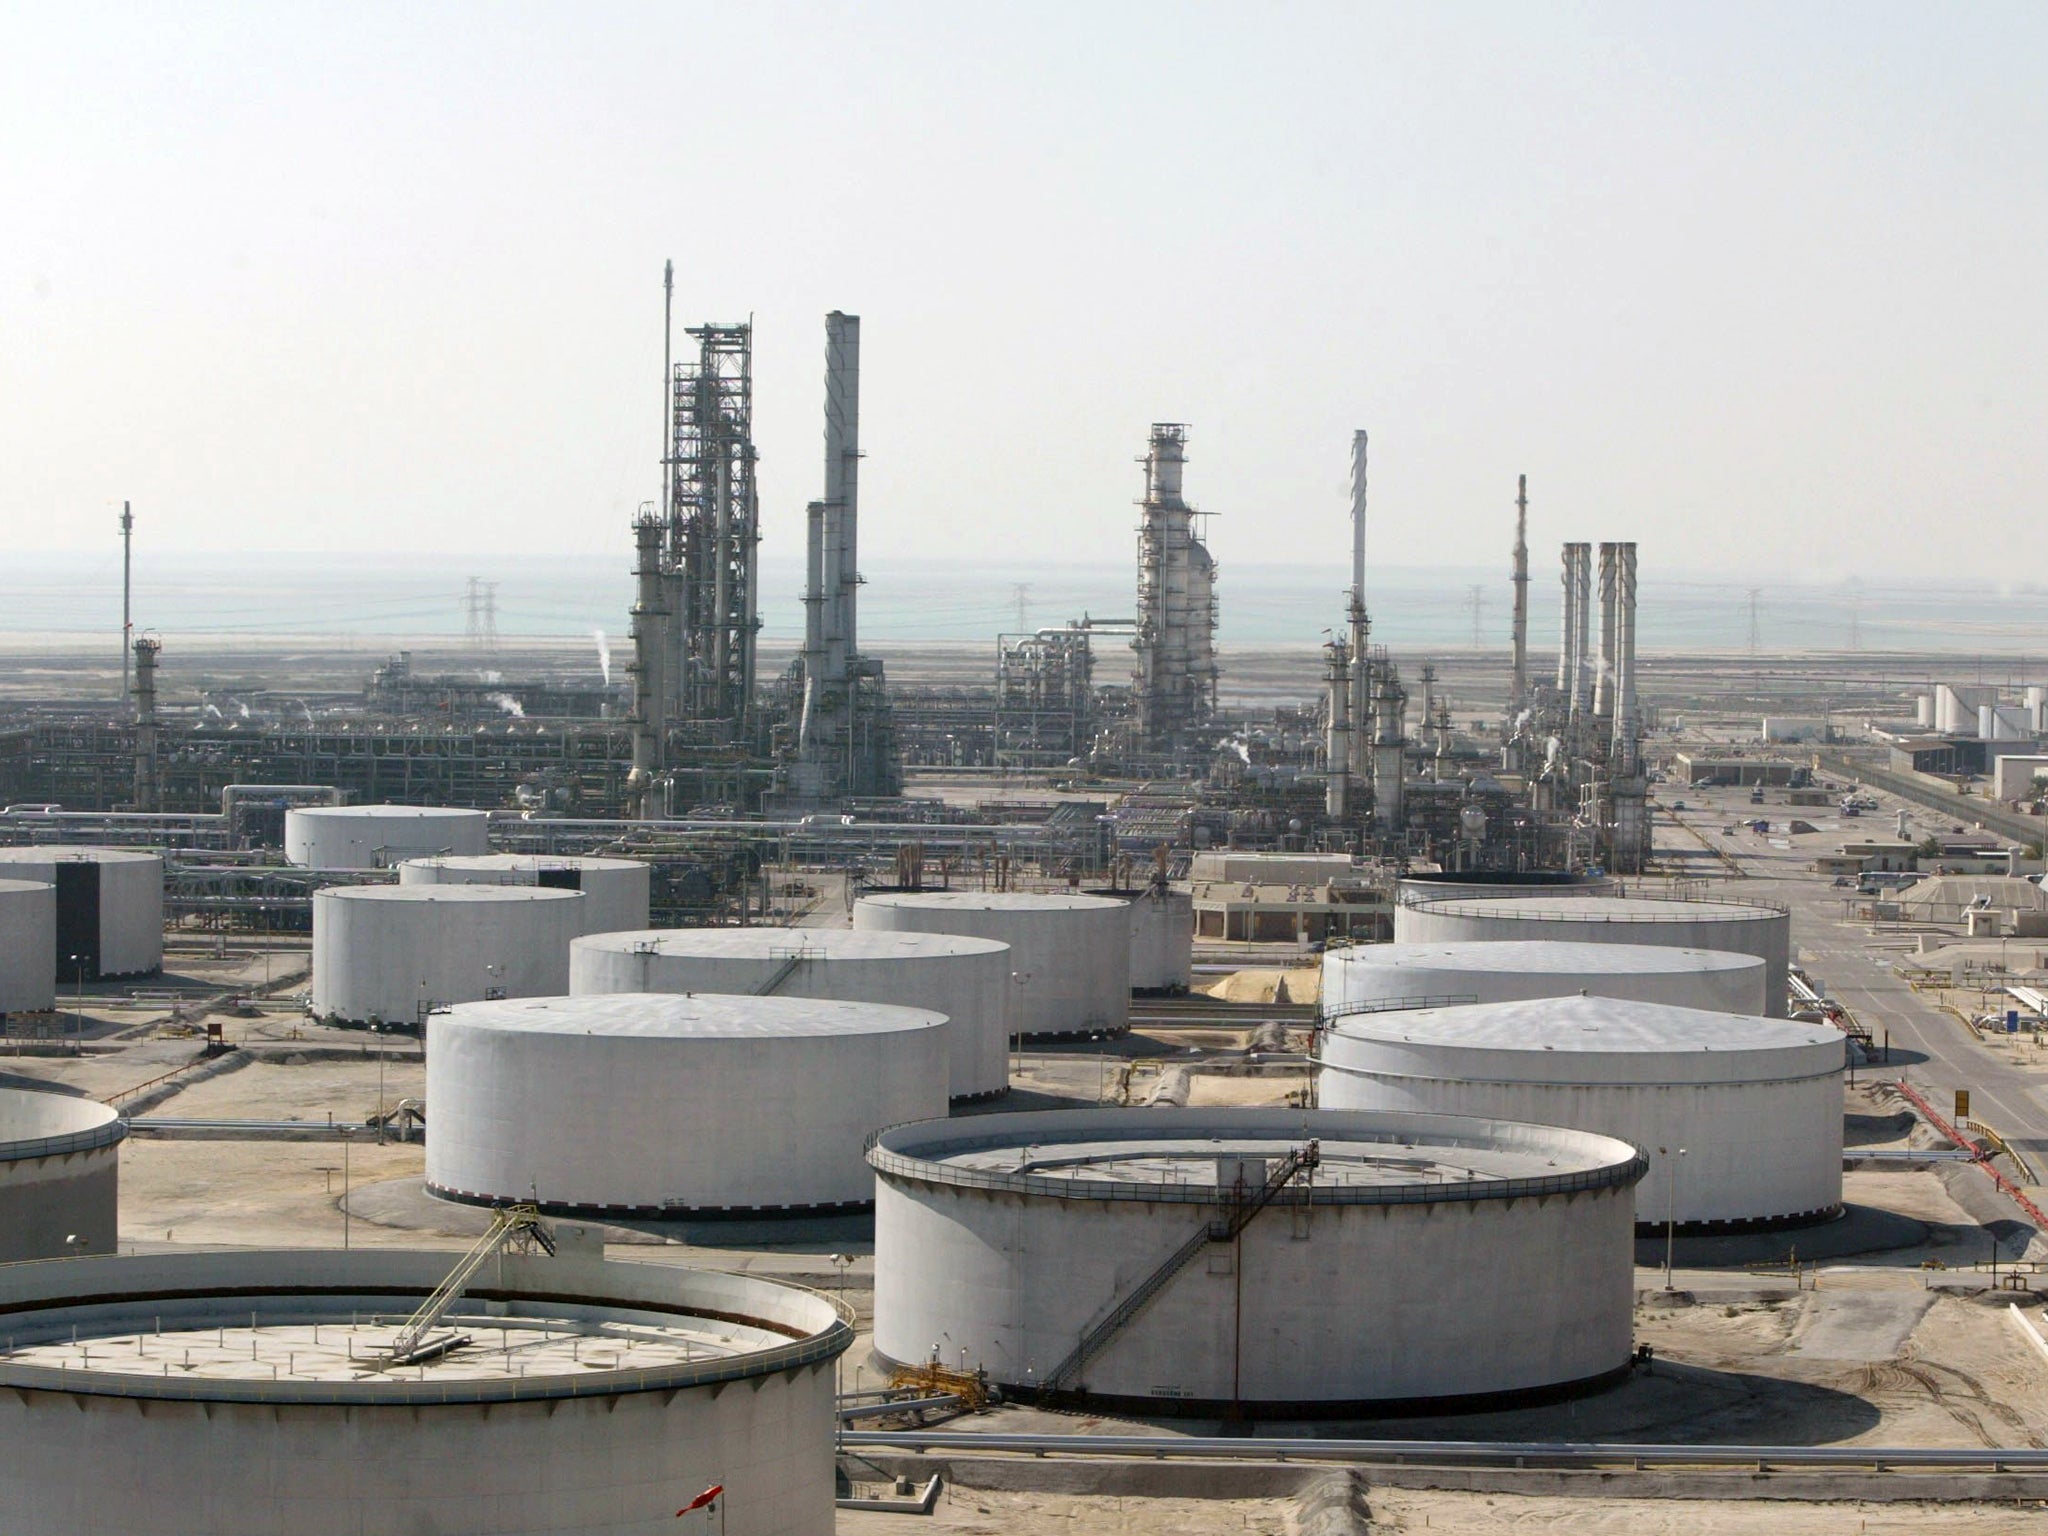 Ras Tannura's oil production plant, Saudi Arabia